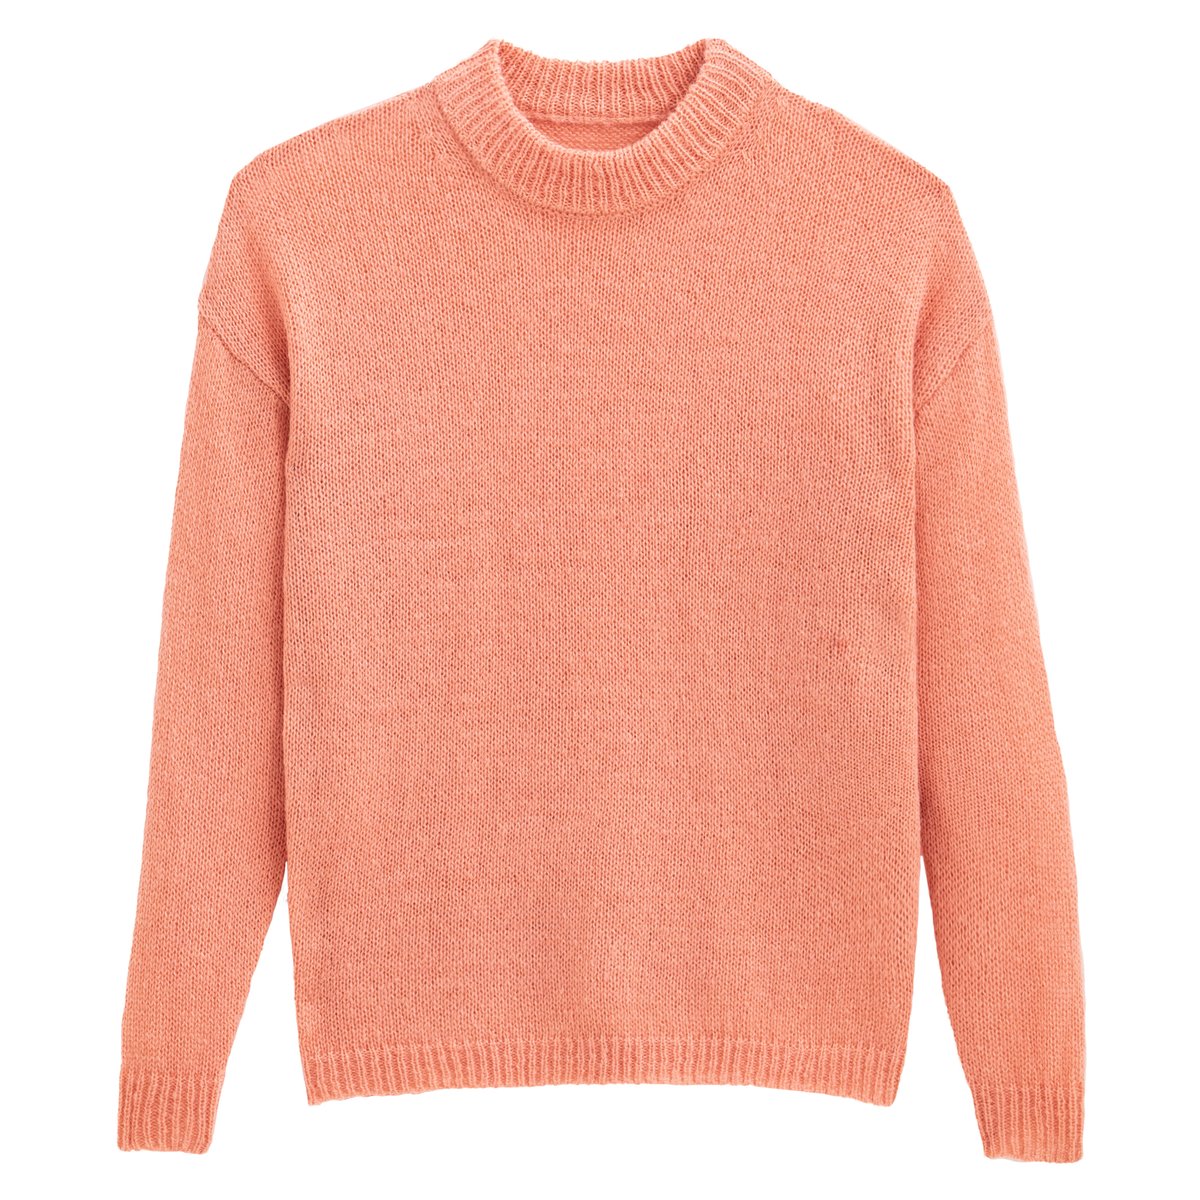 Пуловер La Redoute С круглым вырезом из плотного трикотажа S розовый, размер S - фото 5